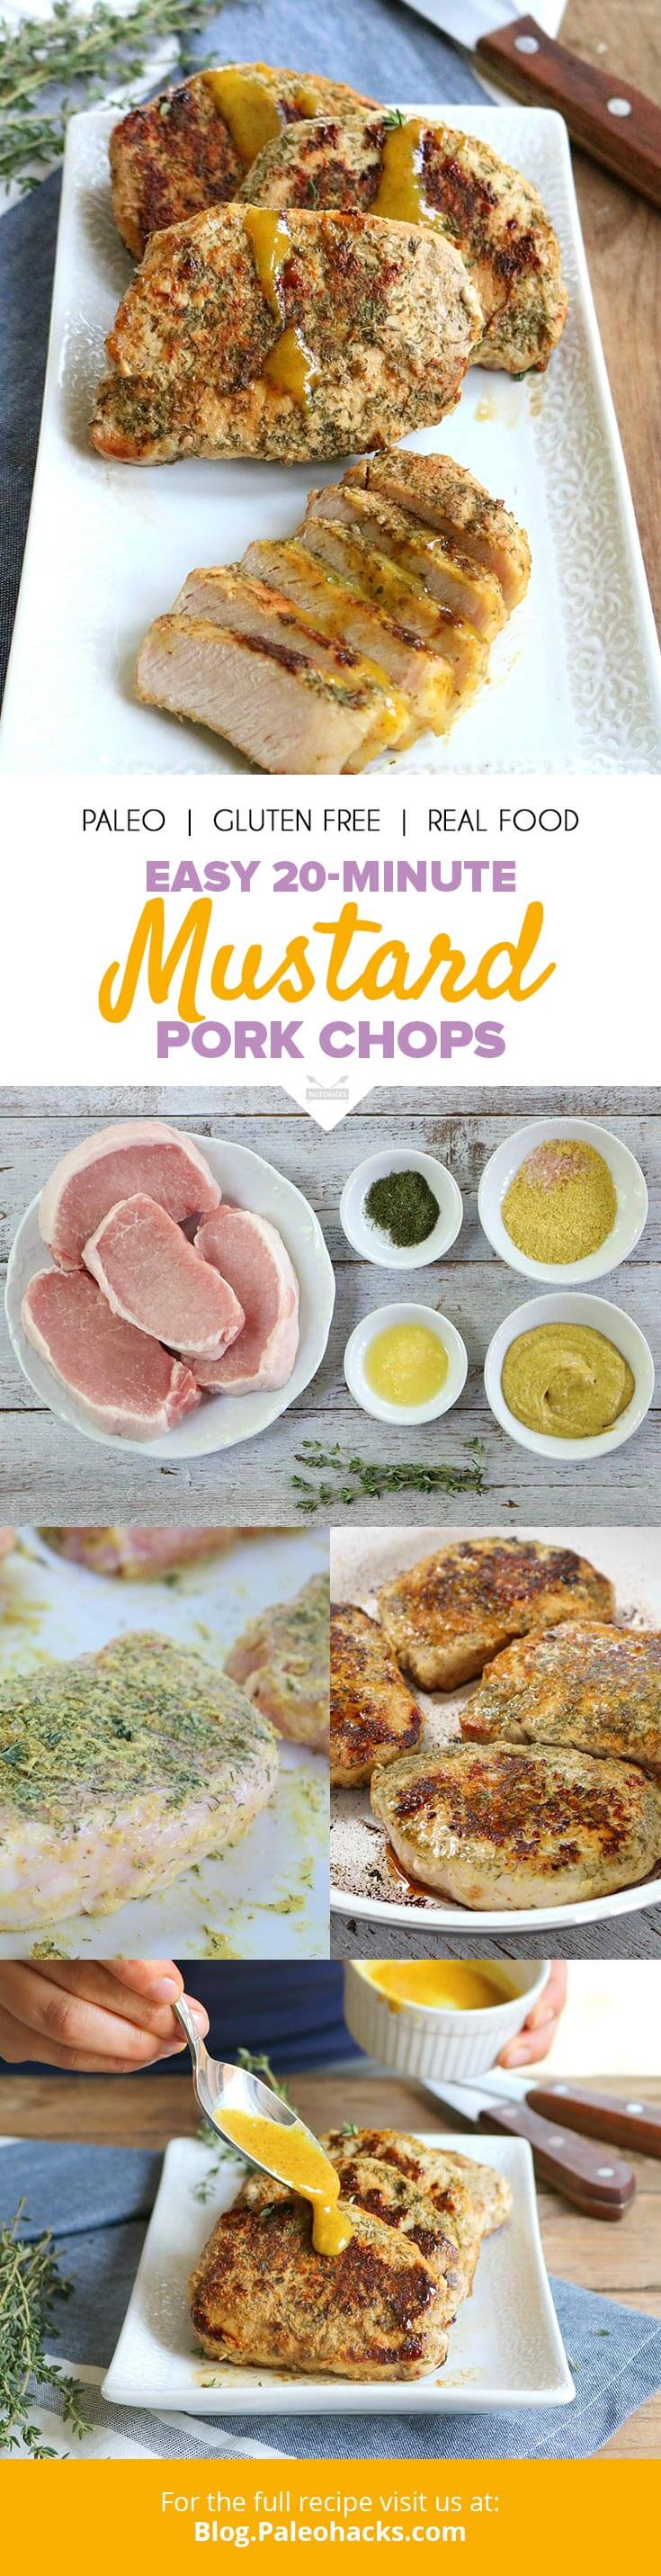 mustard pork chops pin